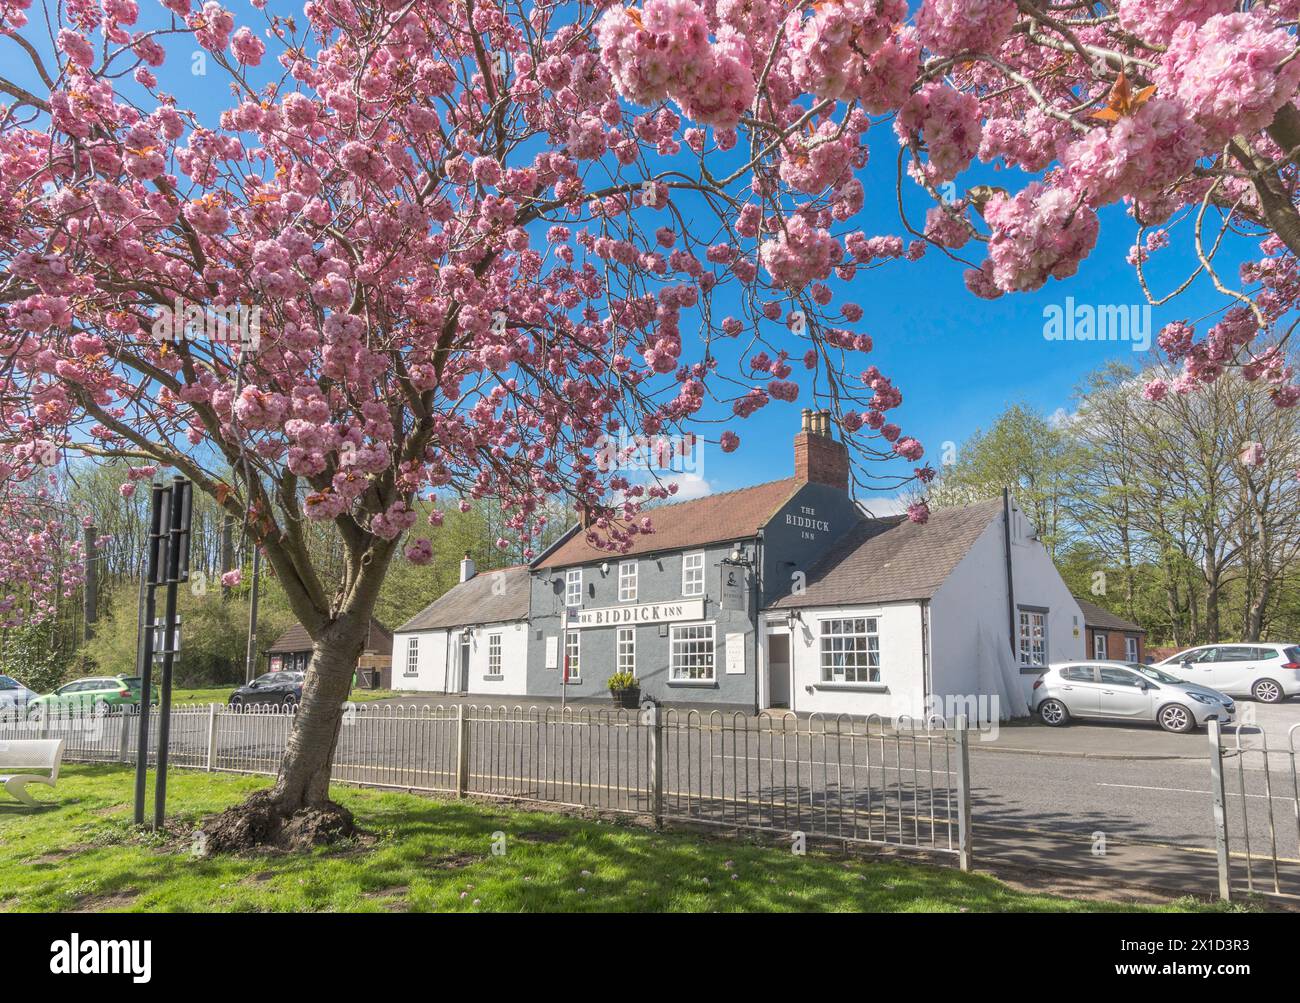 Spring sunshine and cherry blossom frames the Biddick Inn in Fatfield, Washington, England, UK Stock Photo